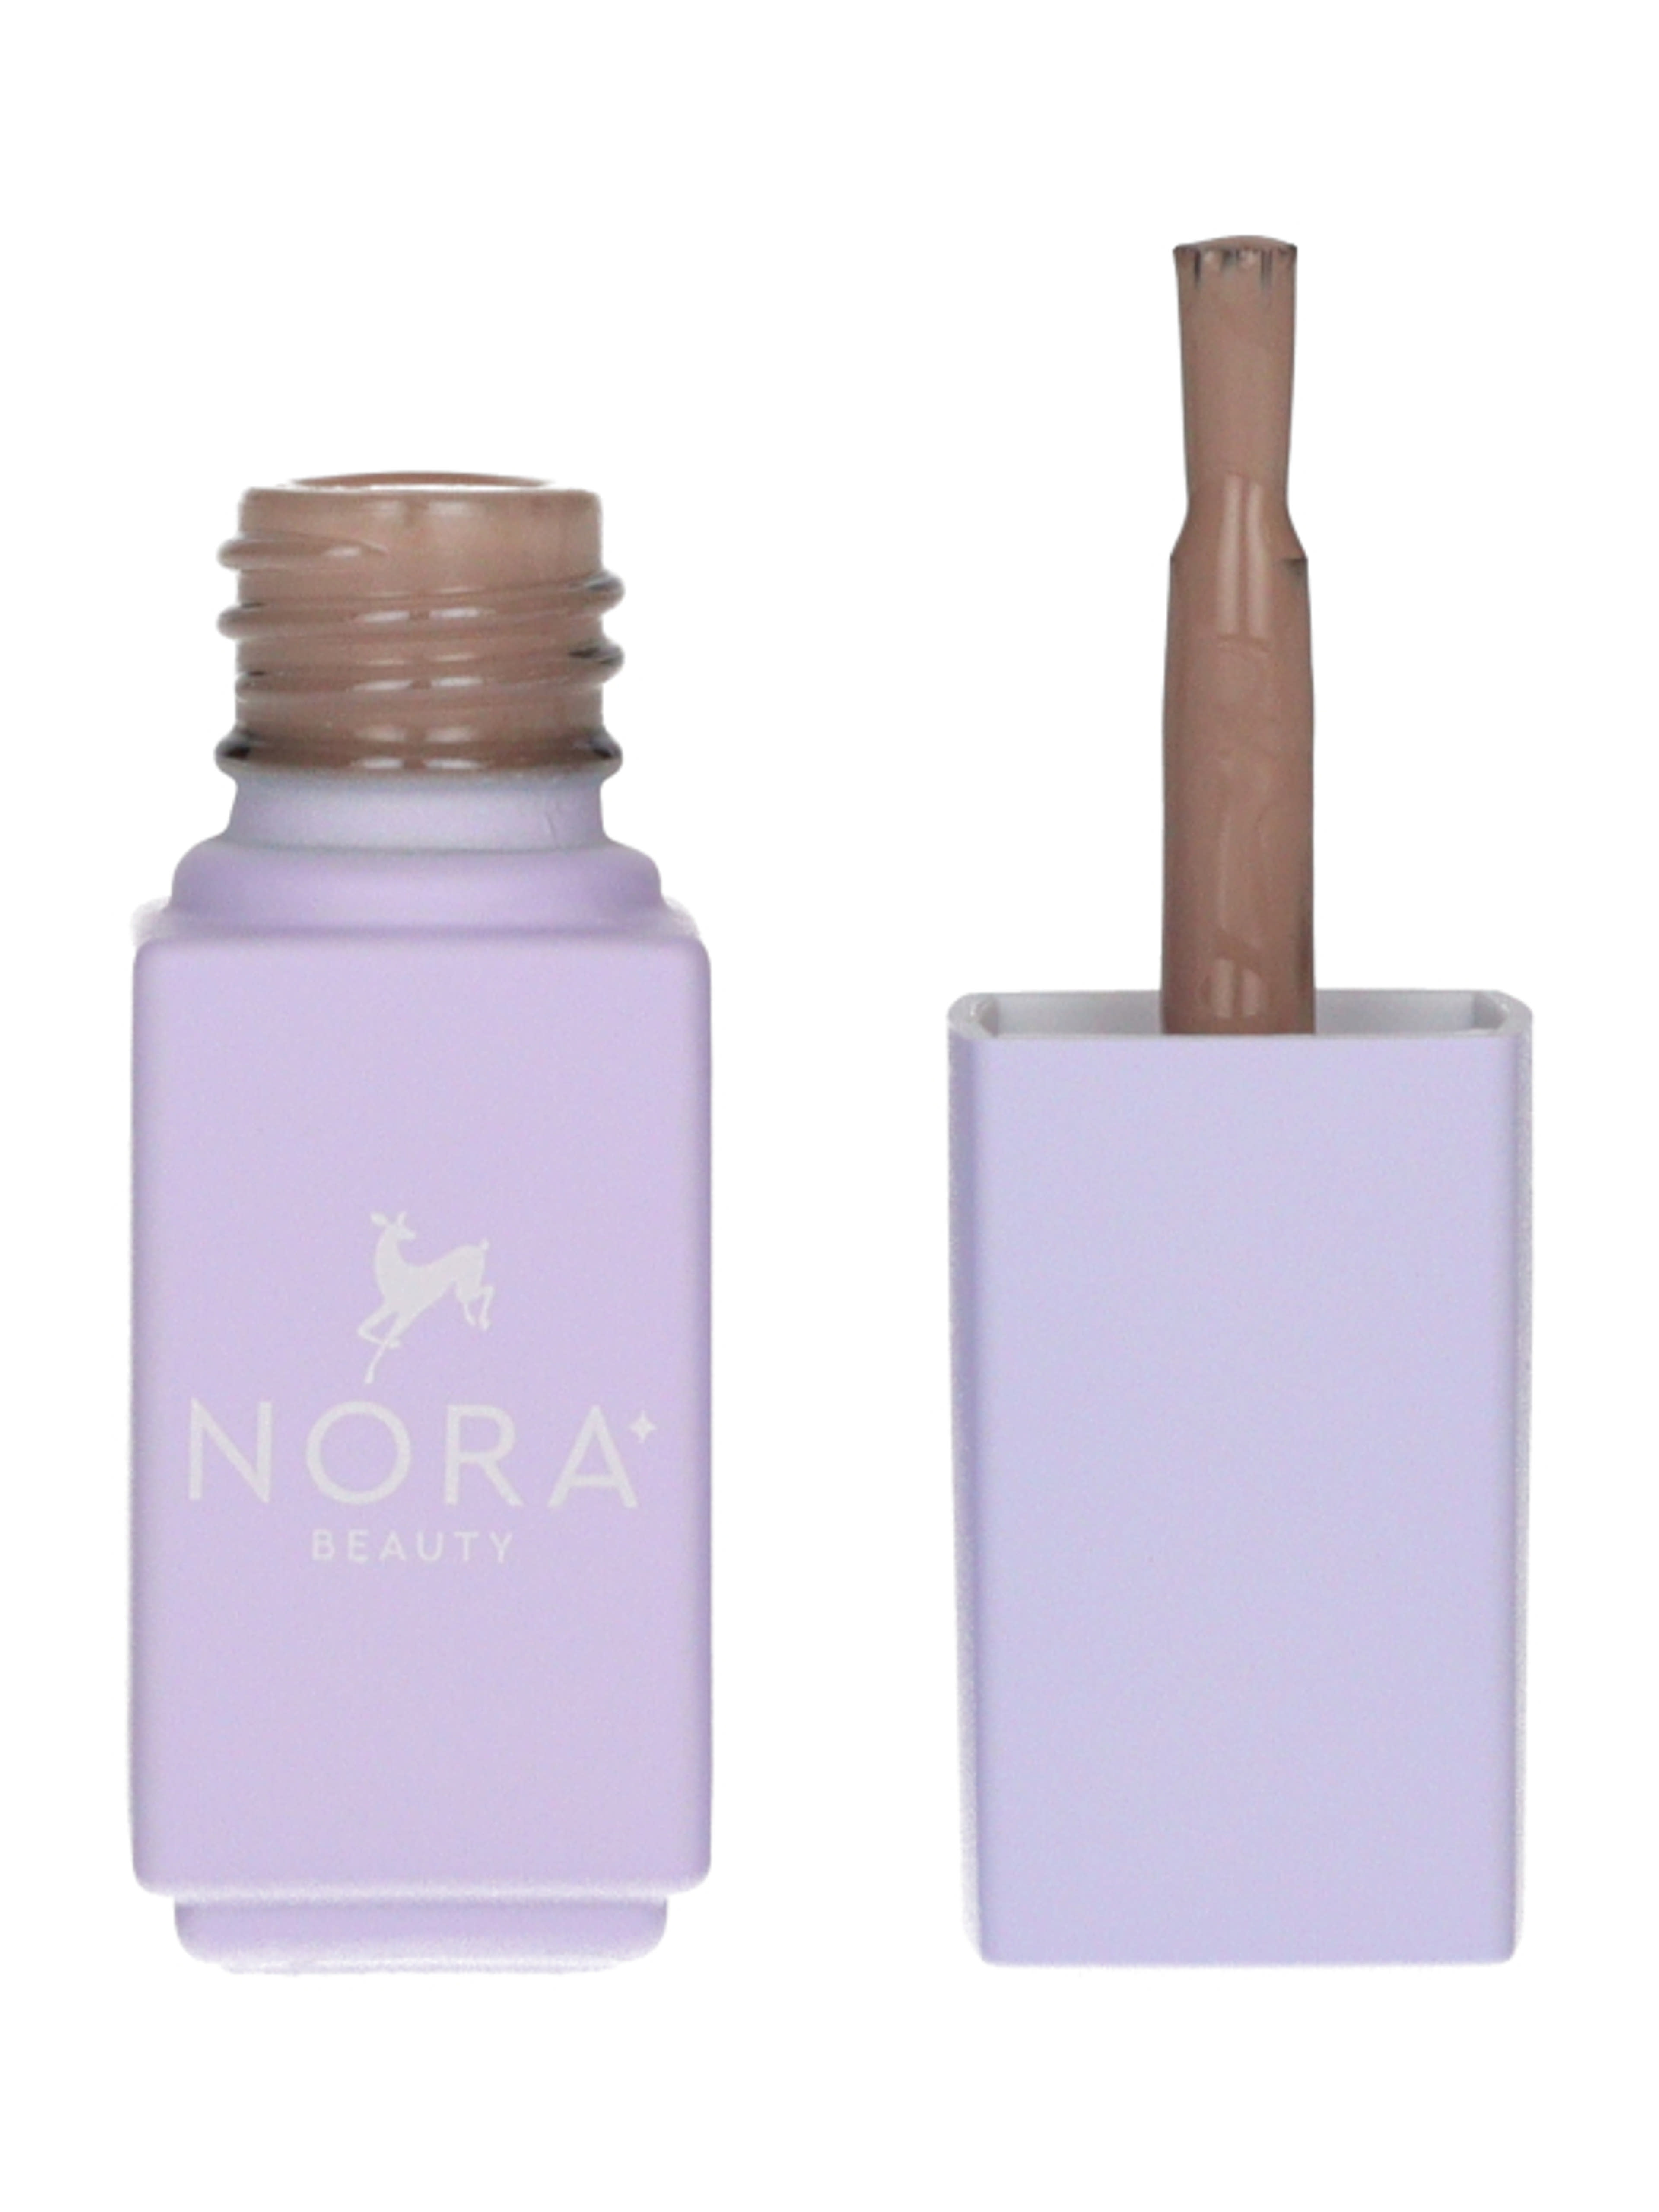 Nora Beauty UV lakkzselé /cn-04 mocha delight - 1 db-4